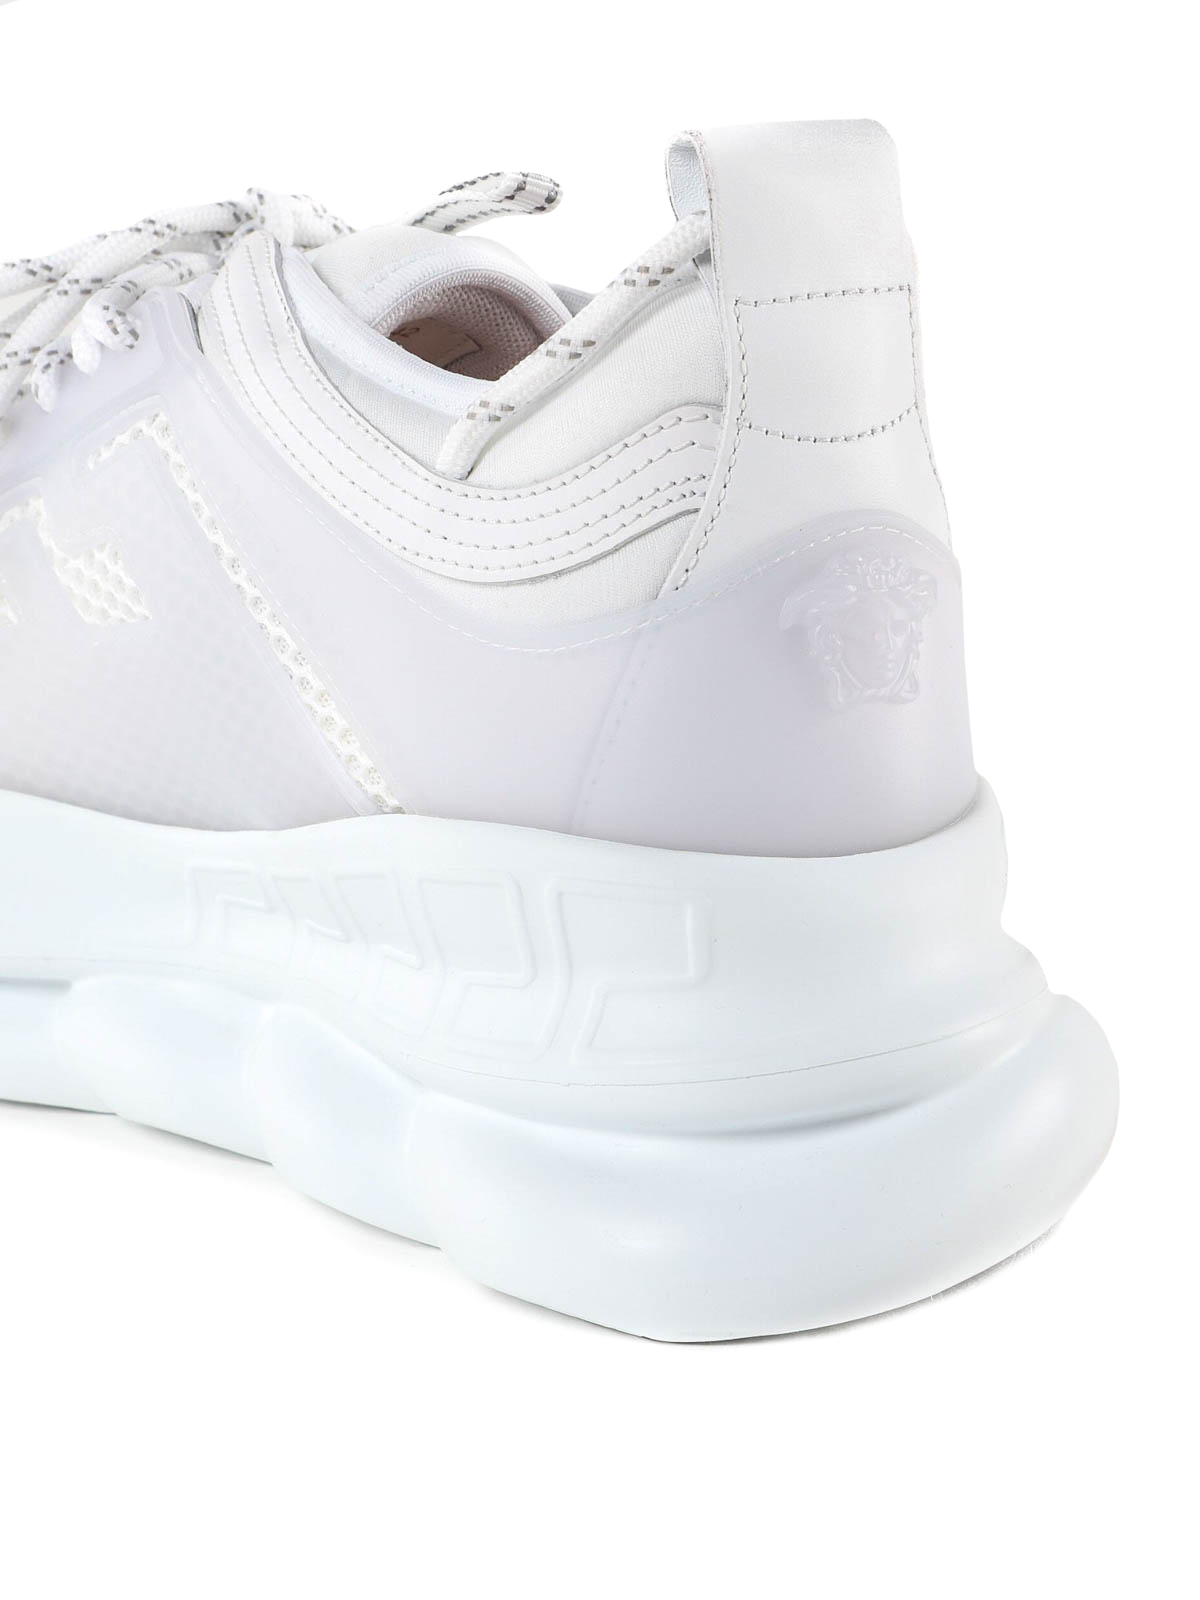 New Versace Chain Reaction Reflective Silver Crystal Rhinestone Sneaker EU41 US8